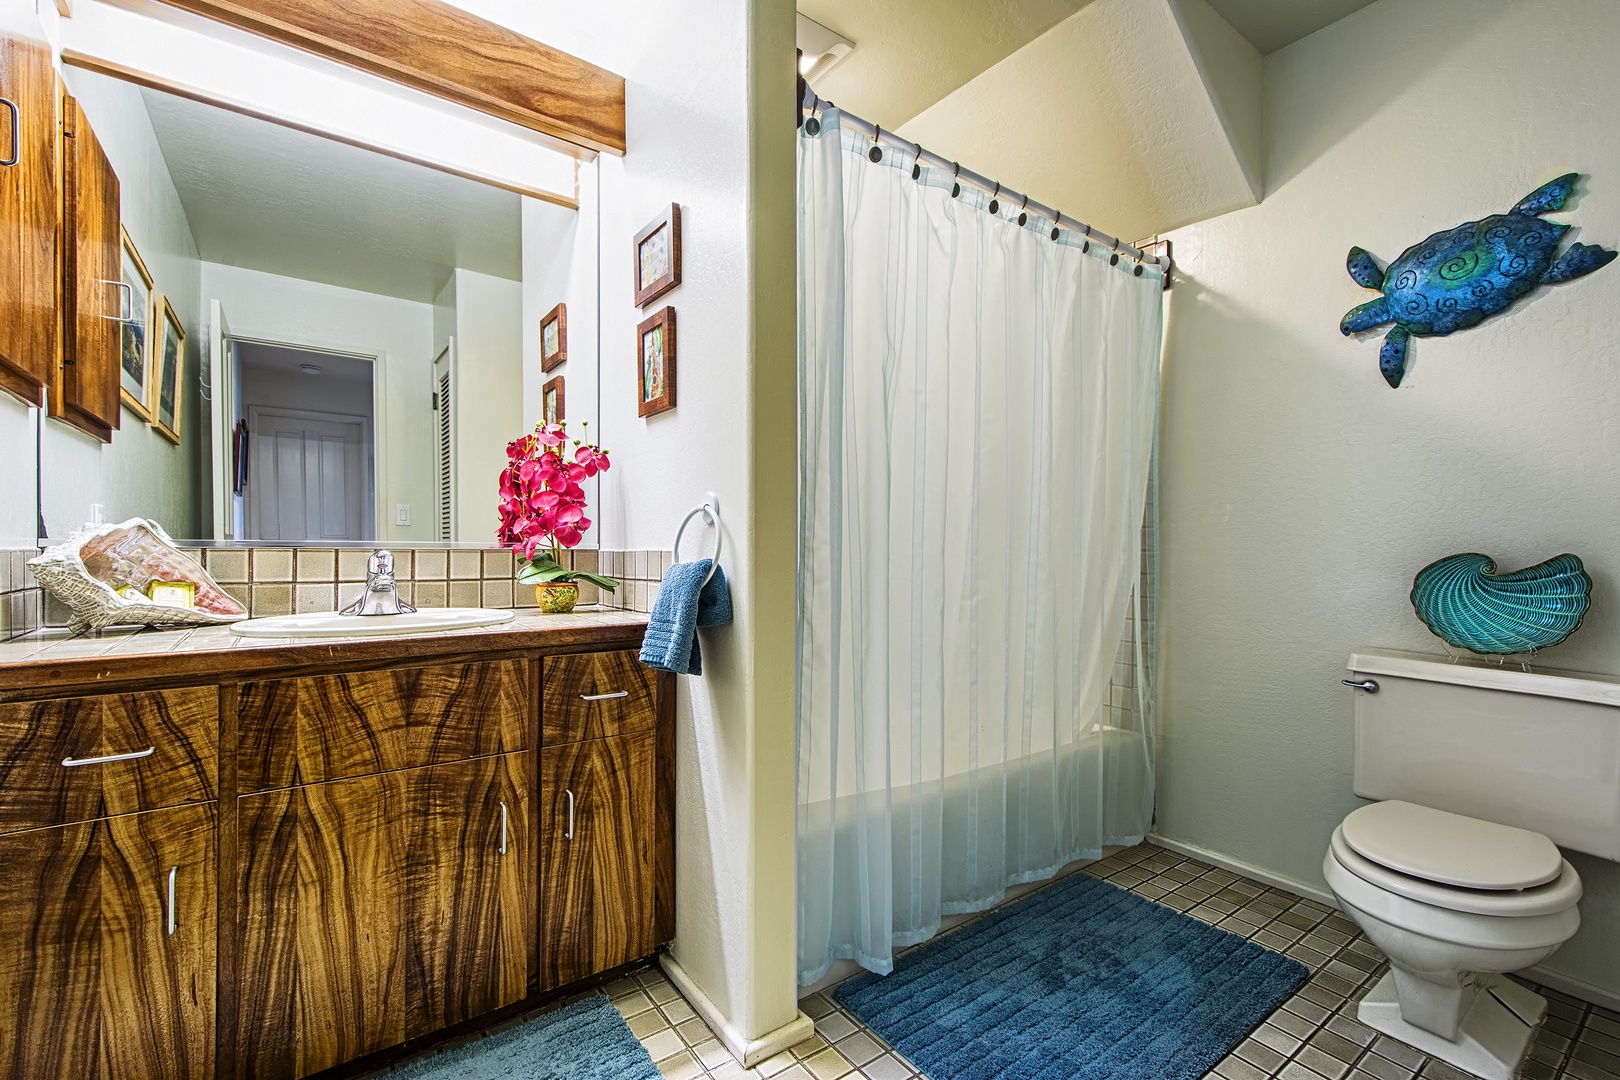 Kailua Kona Vacation Rentals, Kanaloa 701 - Guest bathroom across the hall from the guest bedroom